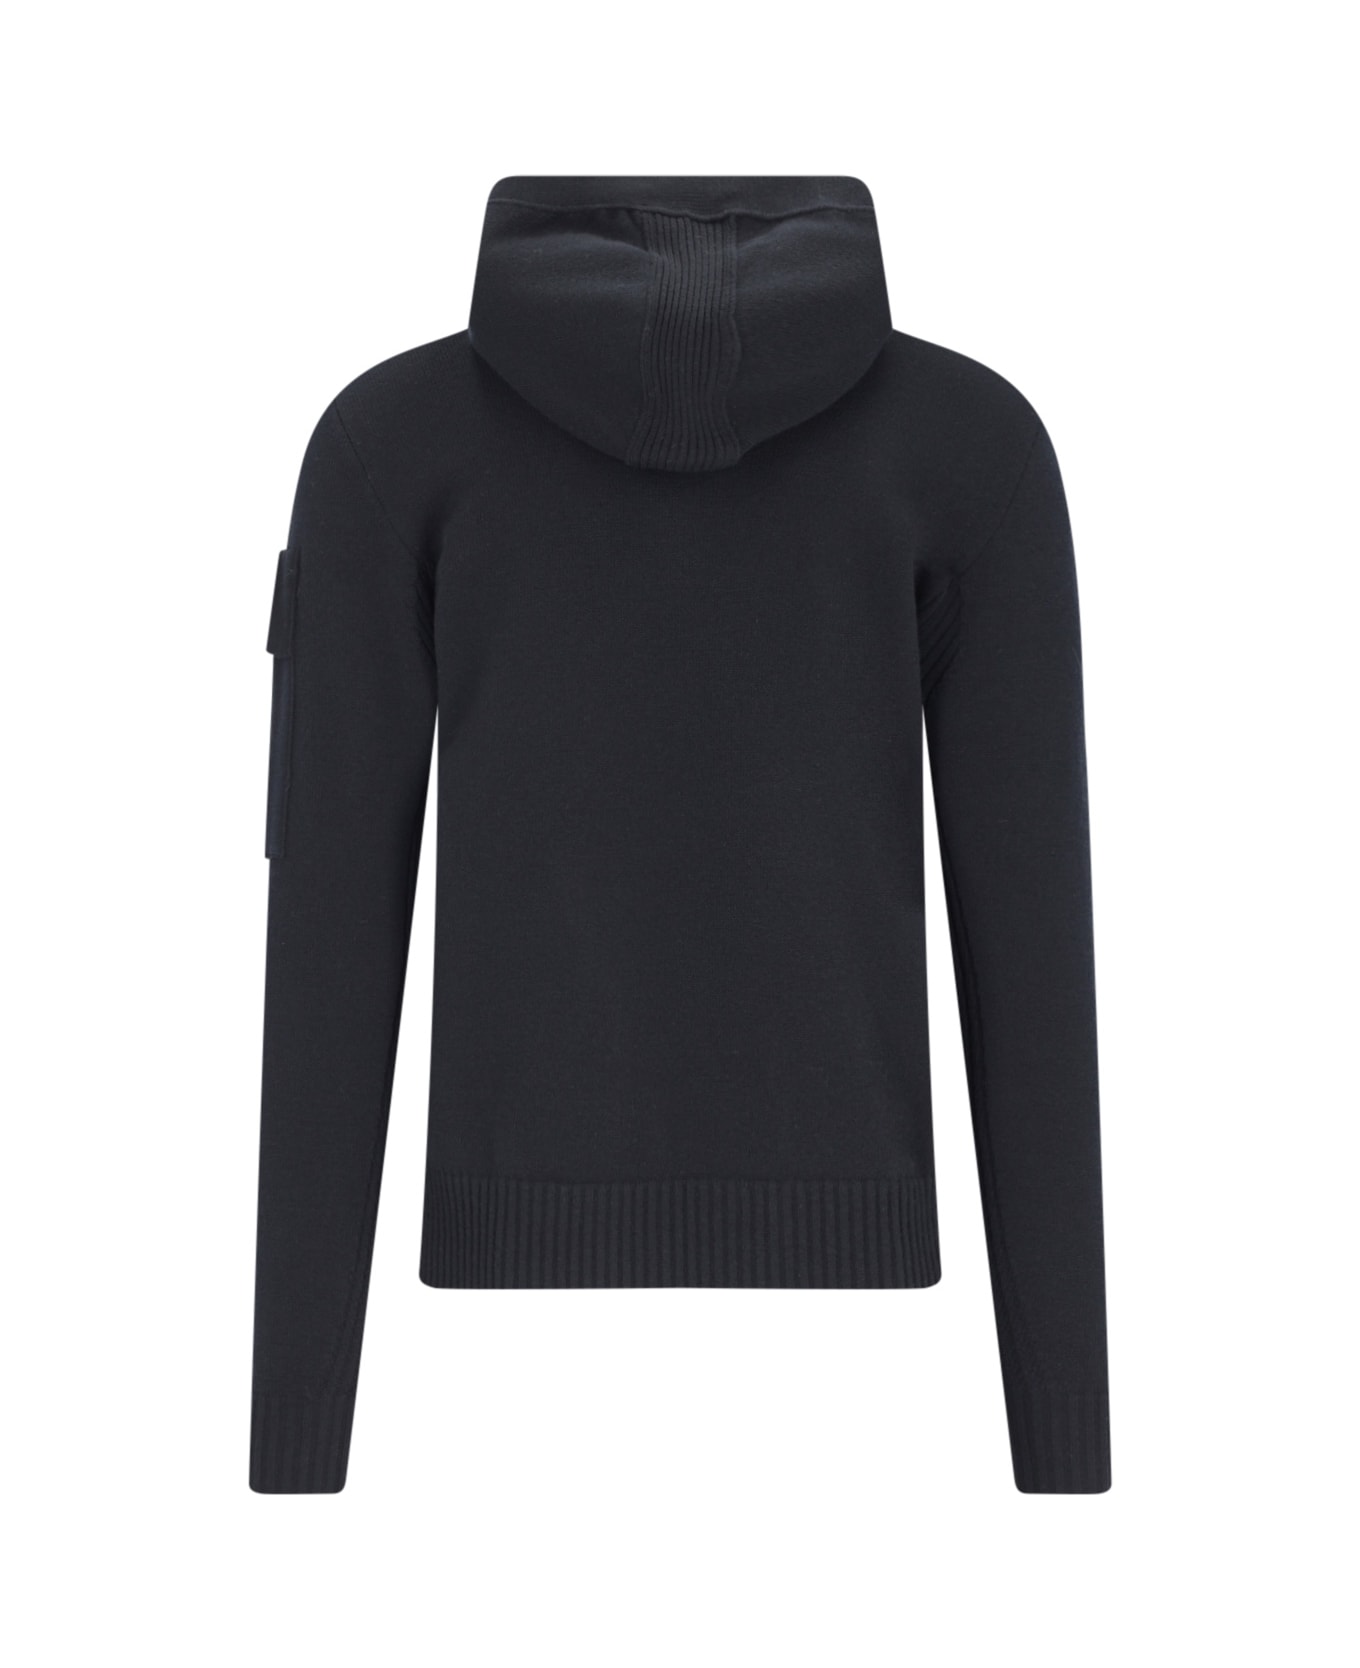 C.P. Company Black Virgin Wool Blend Sweatshirt - Black